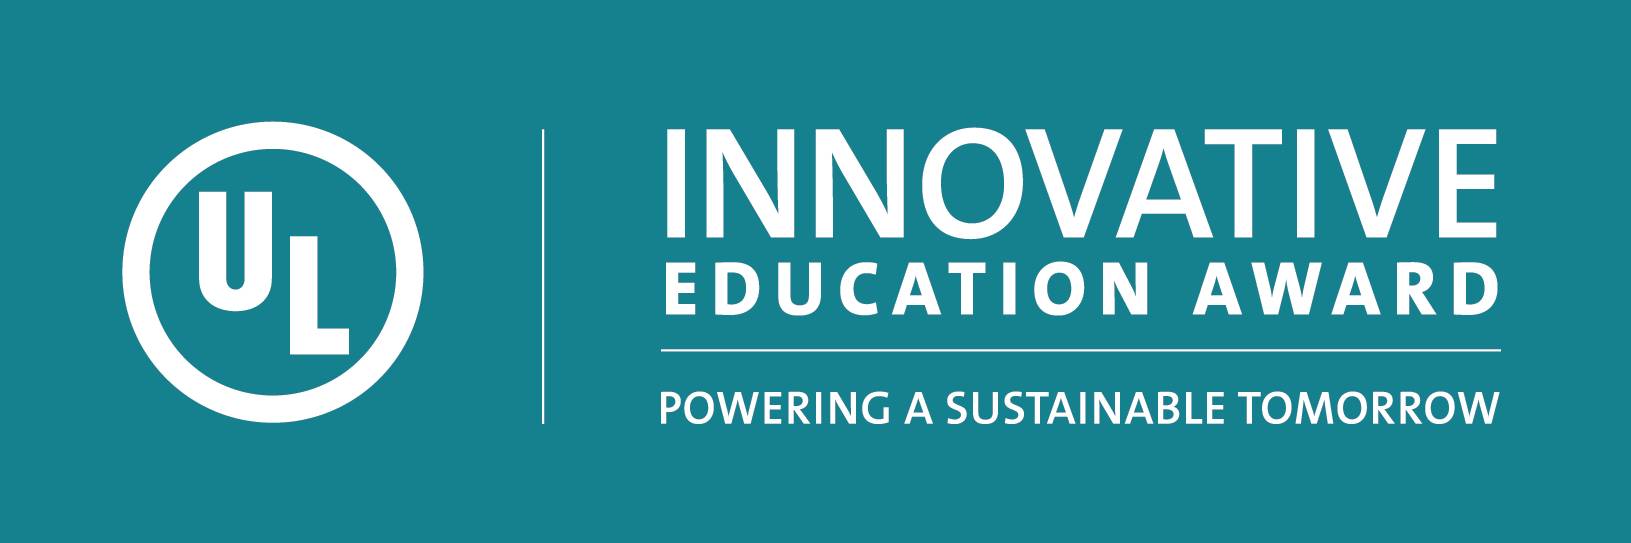 UL Innovative Education Award